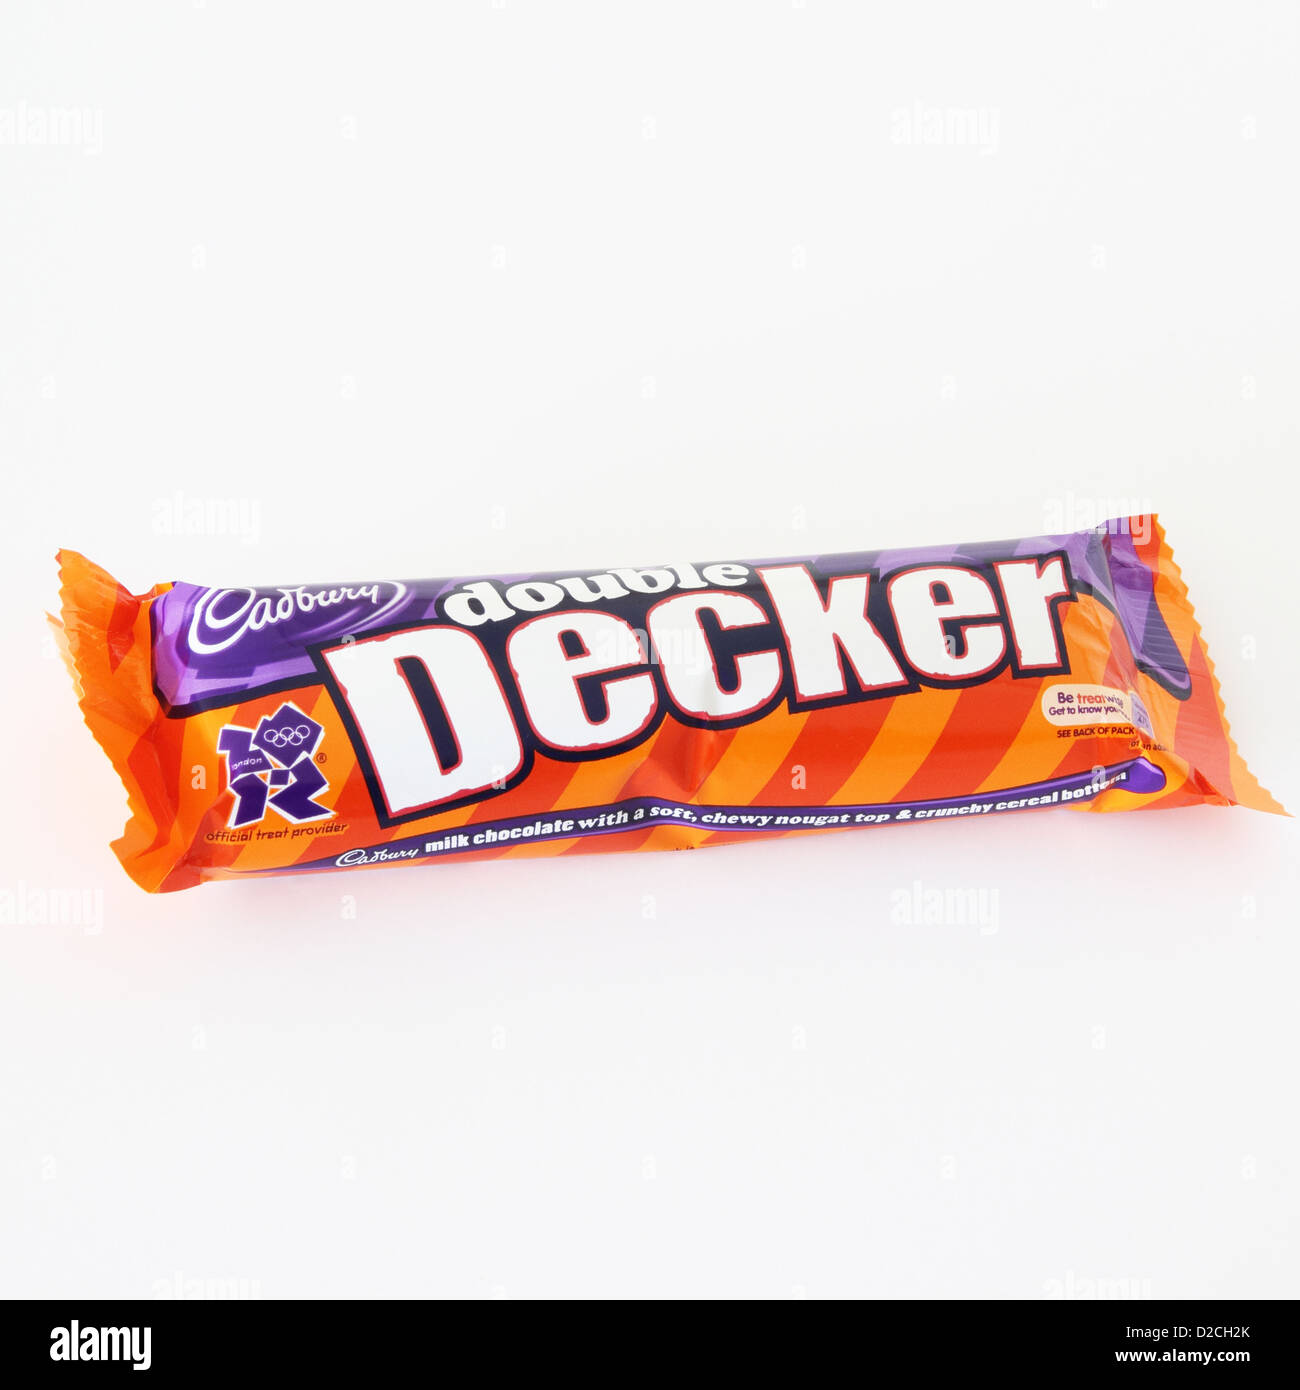 Cadbury's Double Becker Chocolate Bar on a White Background Stock Photo